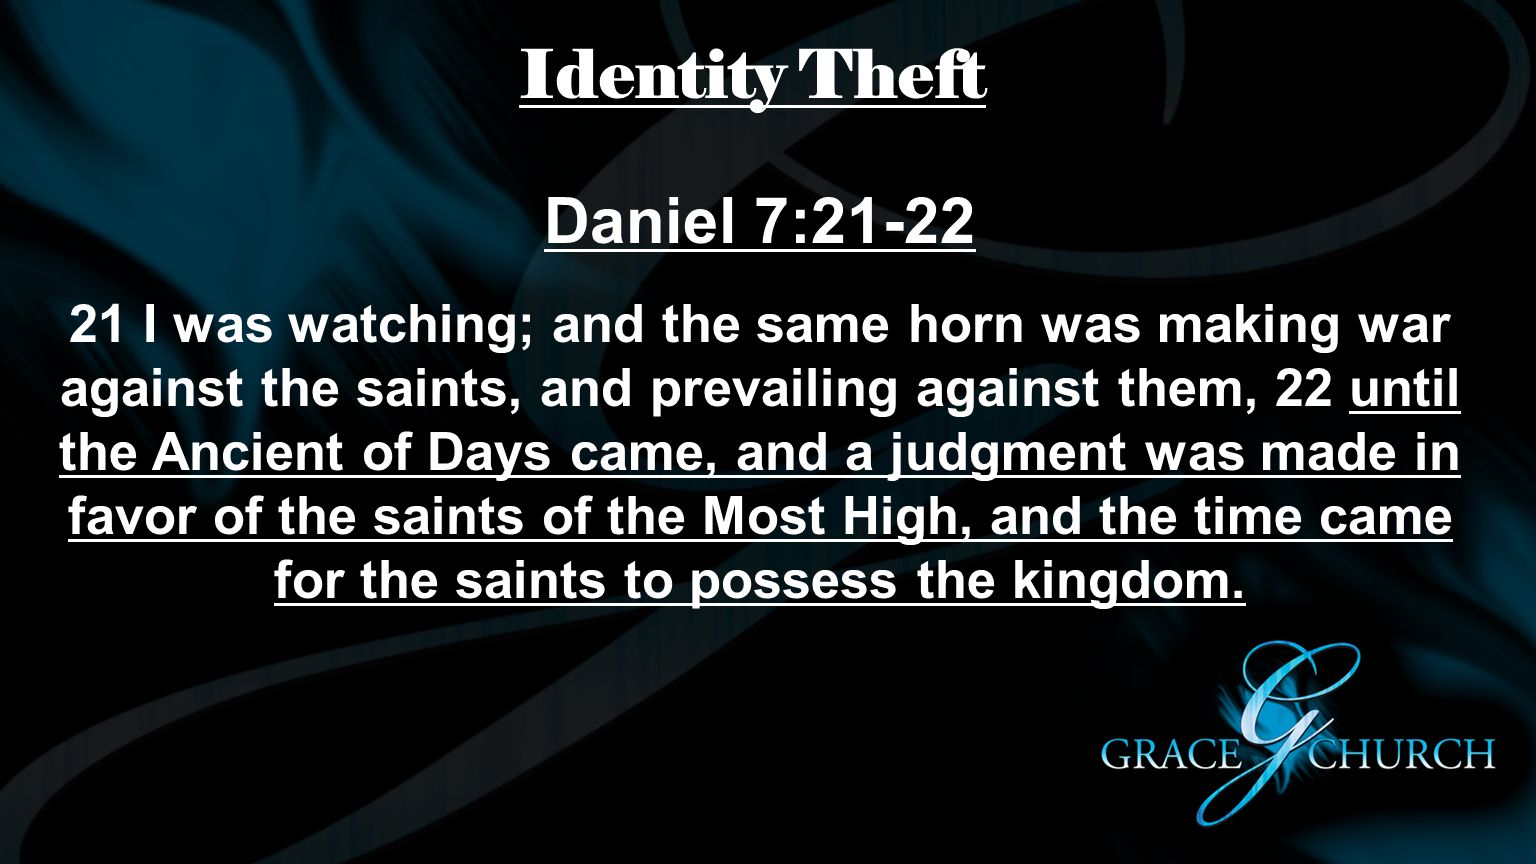 Identity Theft Daniel 7:21-22